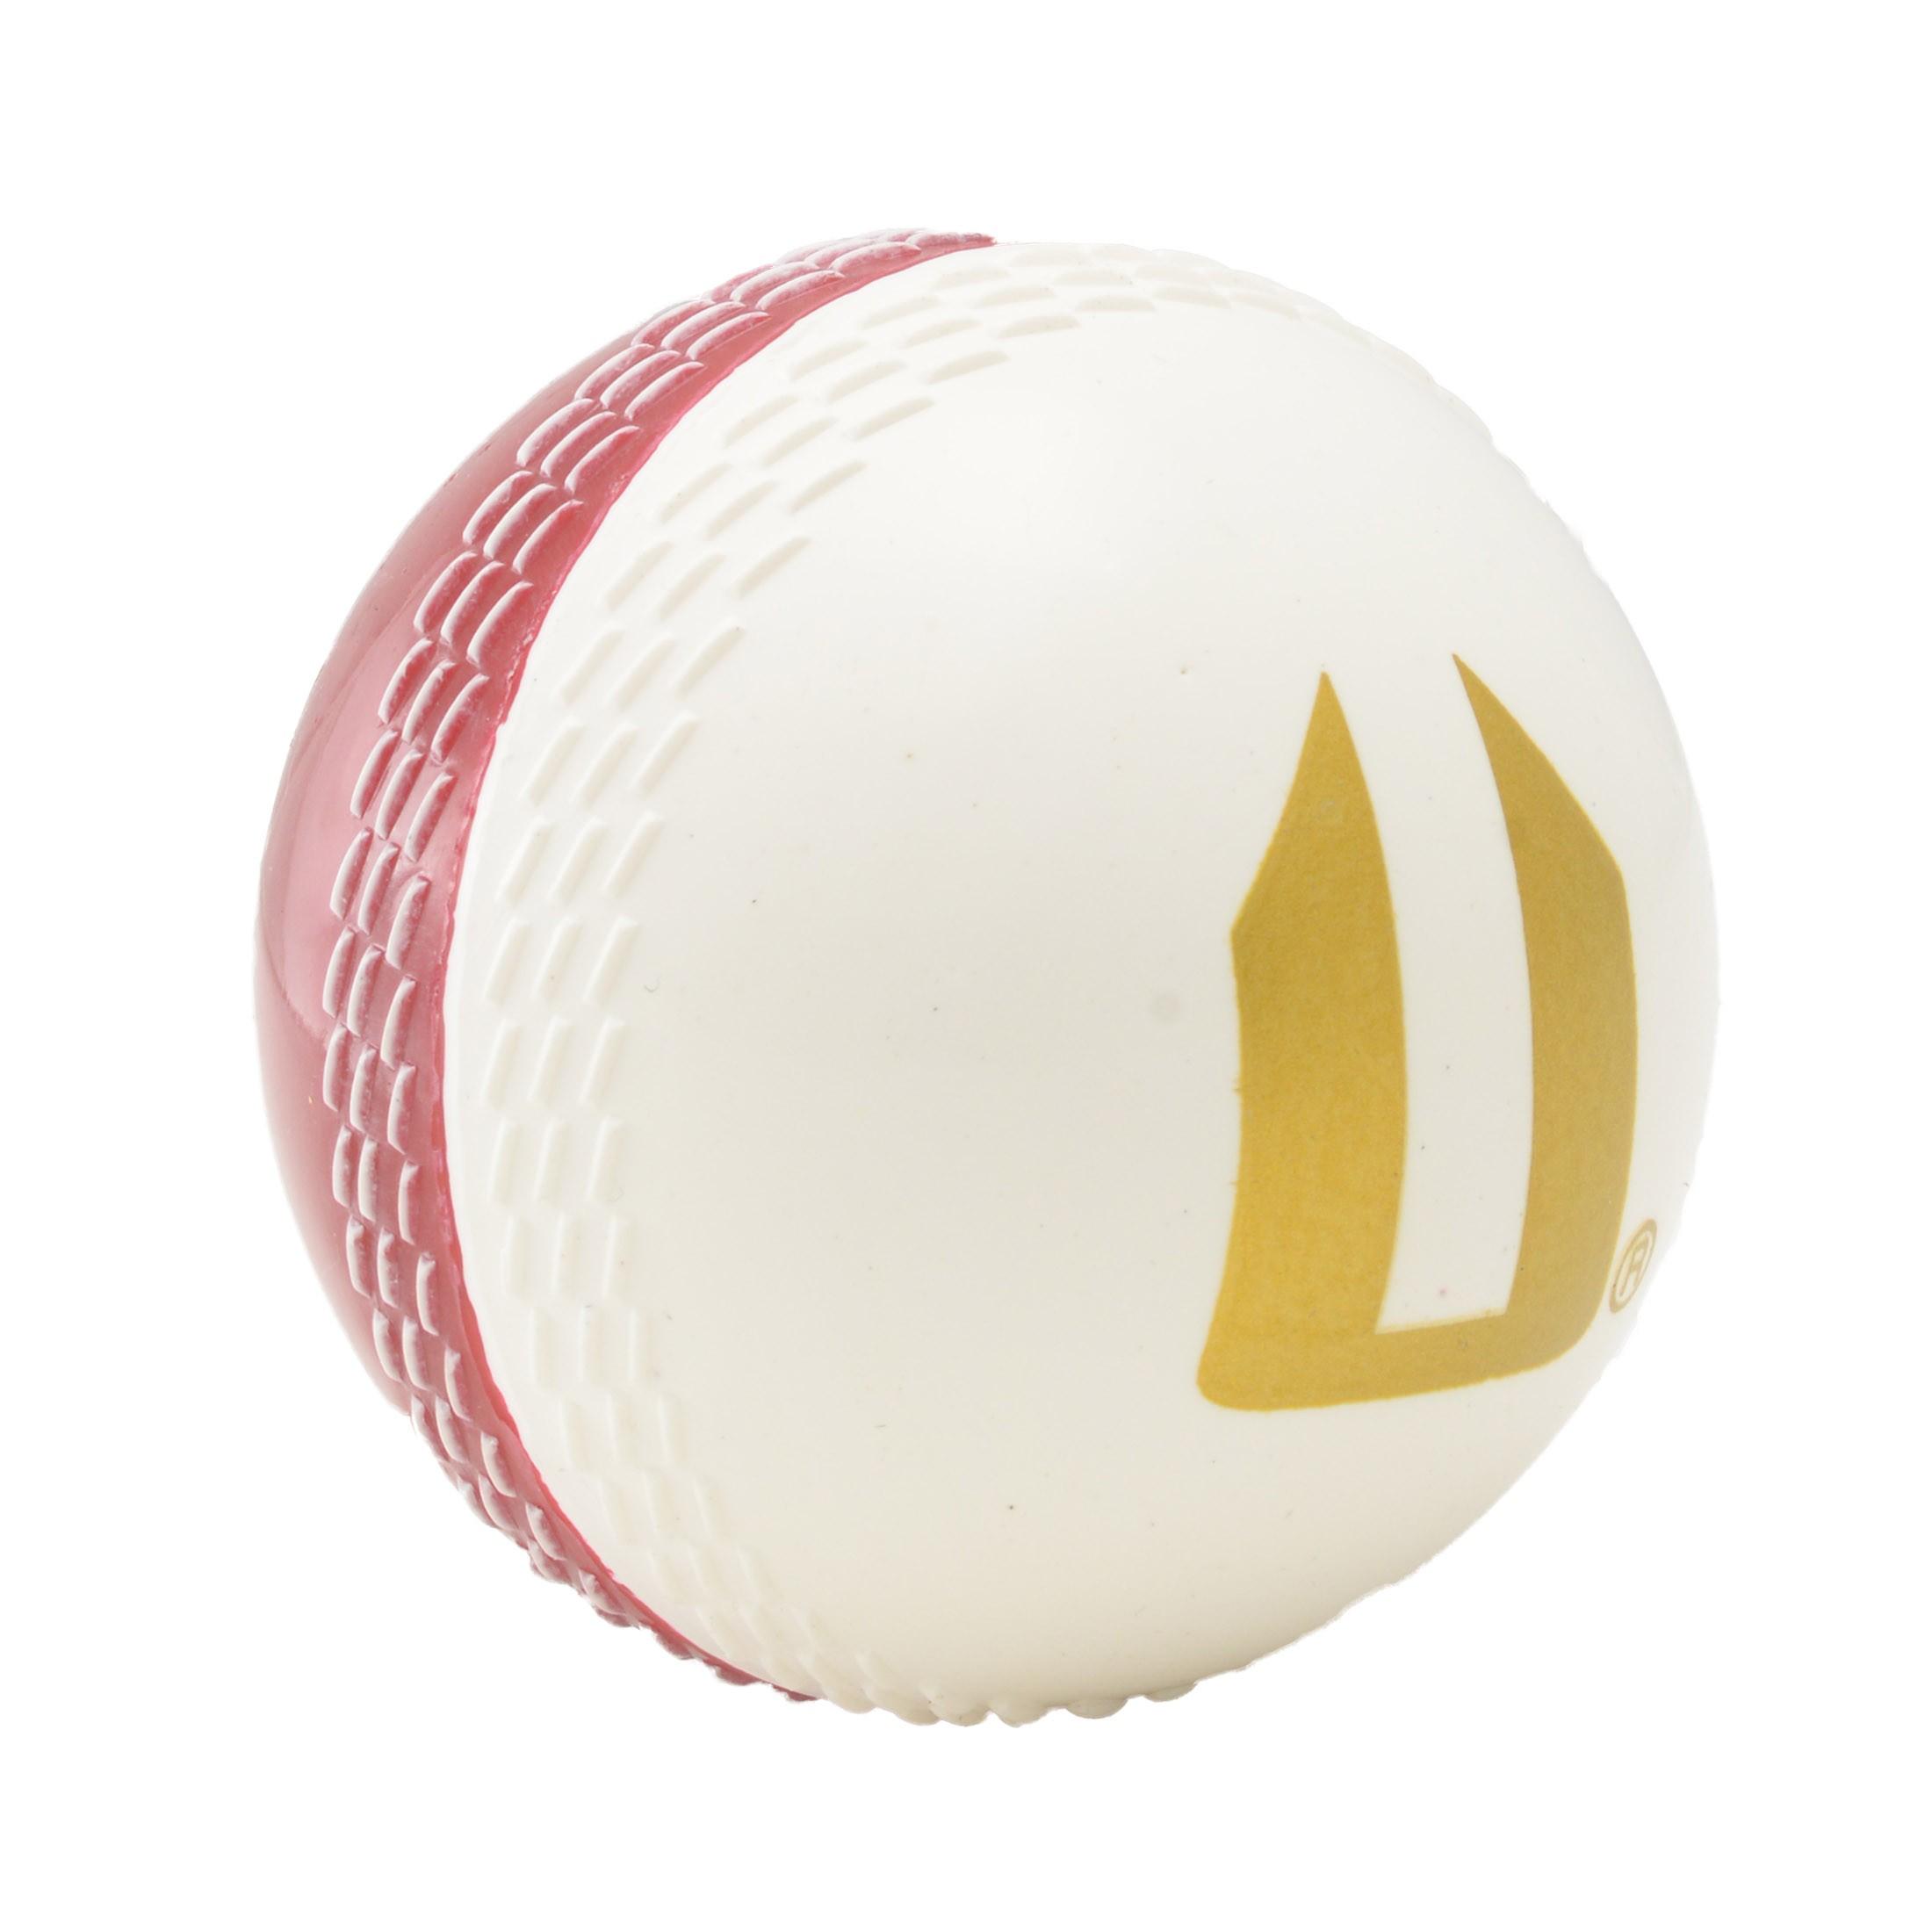 Red Ball White with X Logo - BULK BUY: Opttiuuq Magikk Ball PVC Cricket Training Ball – Red/White x 6